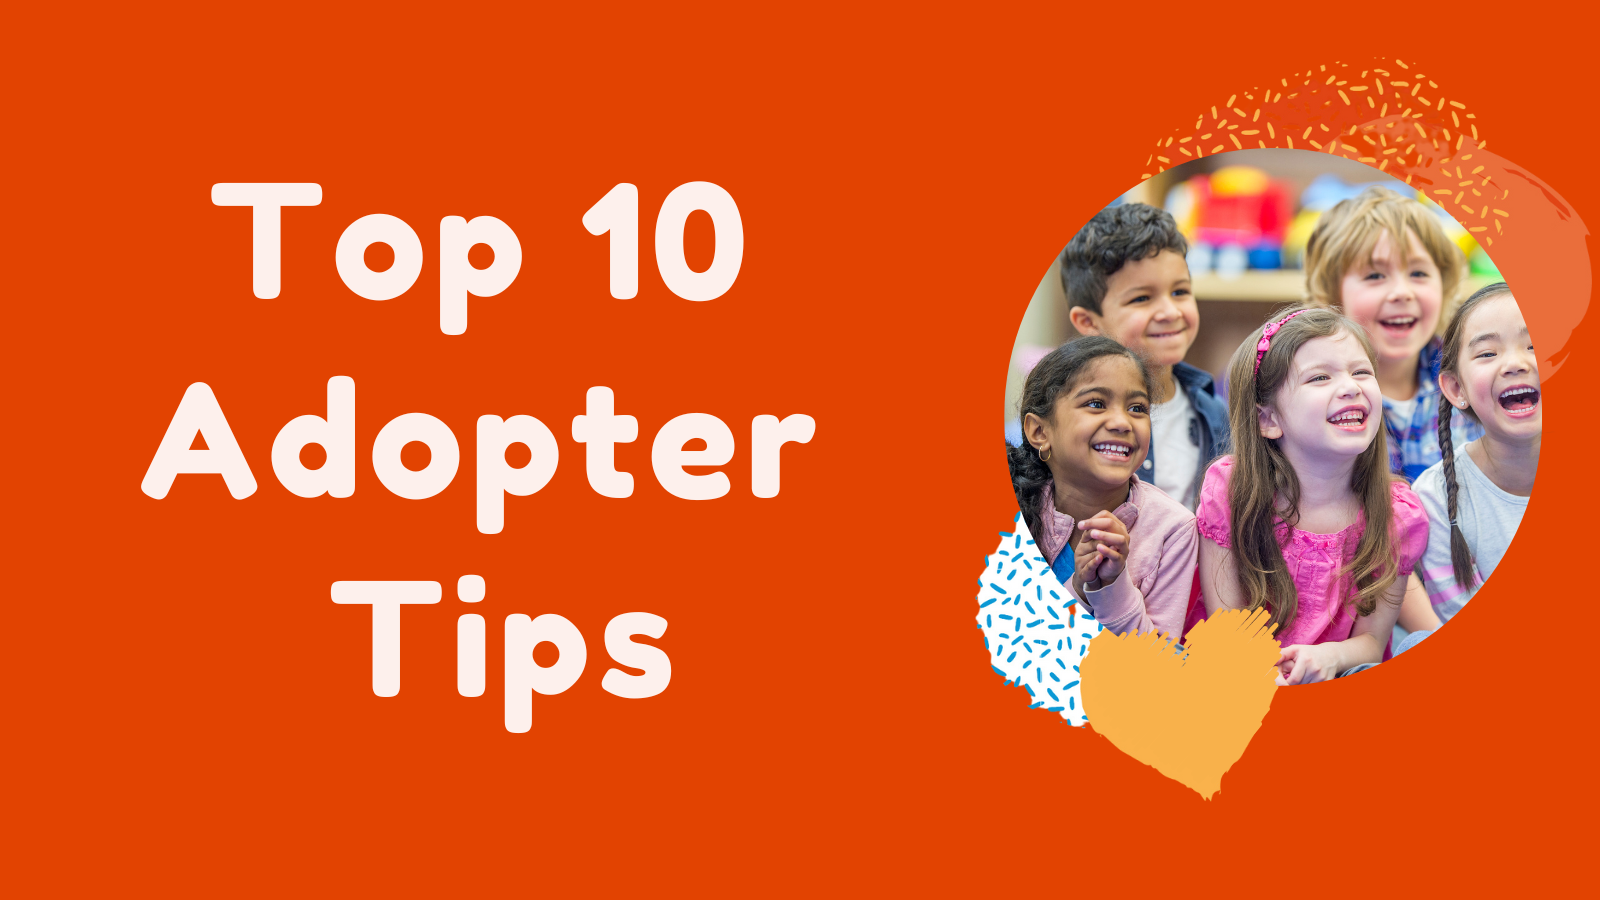 Top 10 Adopter Tips